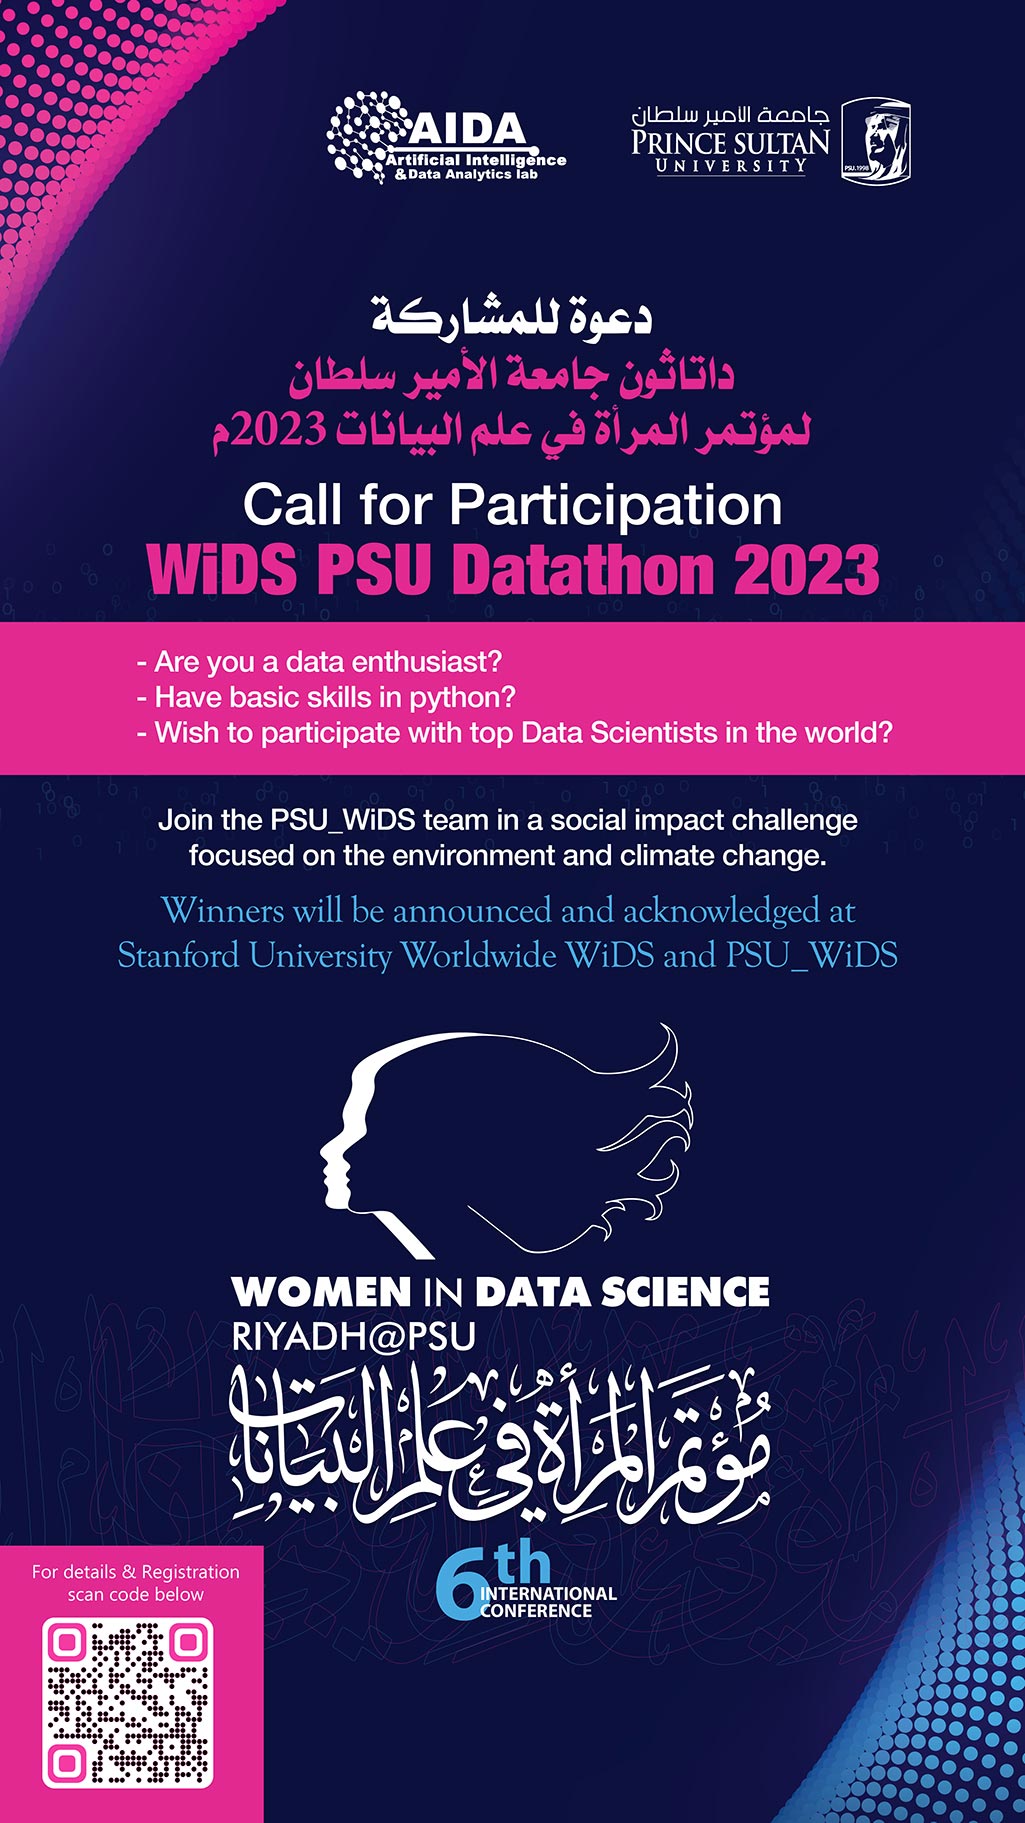 WiDS PSU Datathon 2023